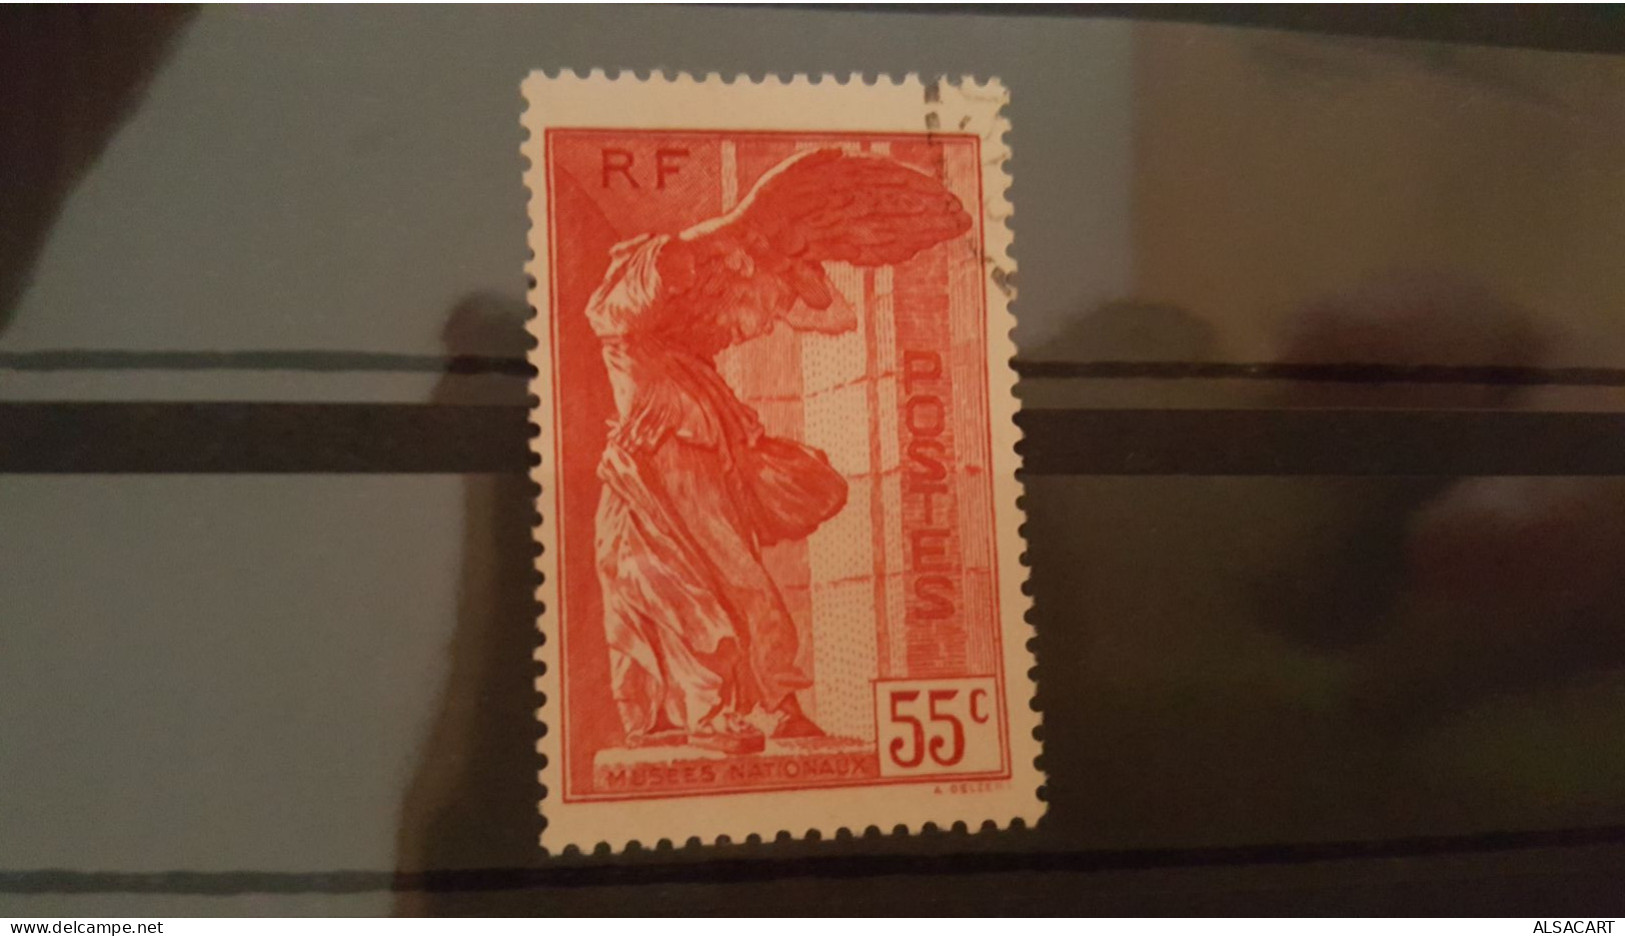 Timbre Yvert Et Tellier 355 Samothrace Oblitéré , Bon Centrage - Used Stamps